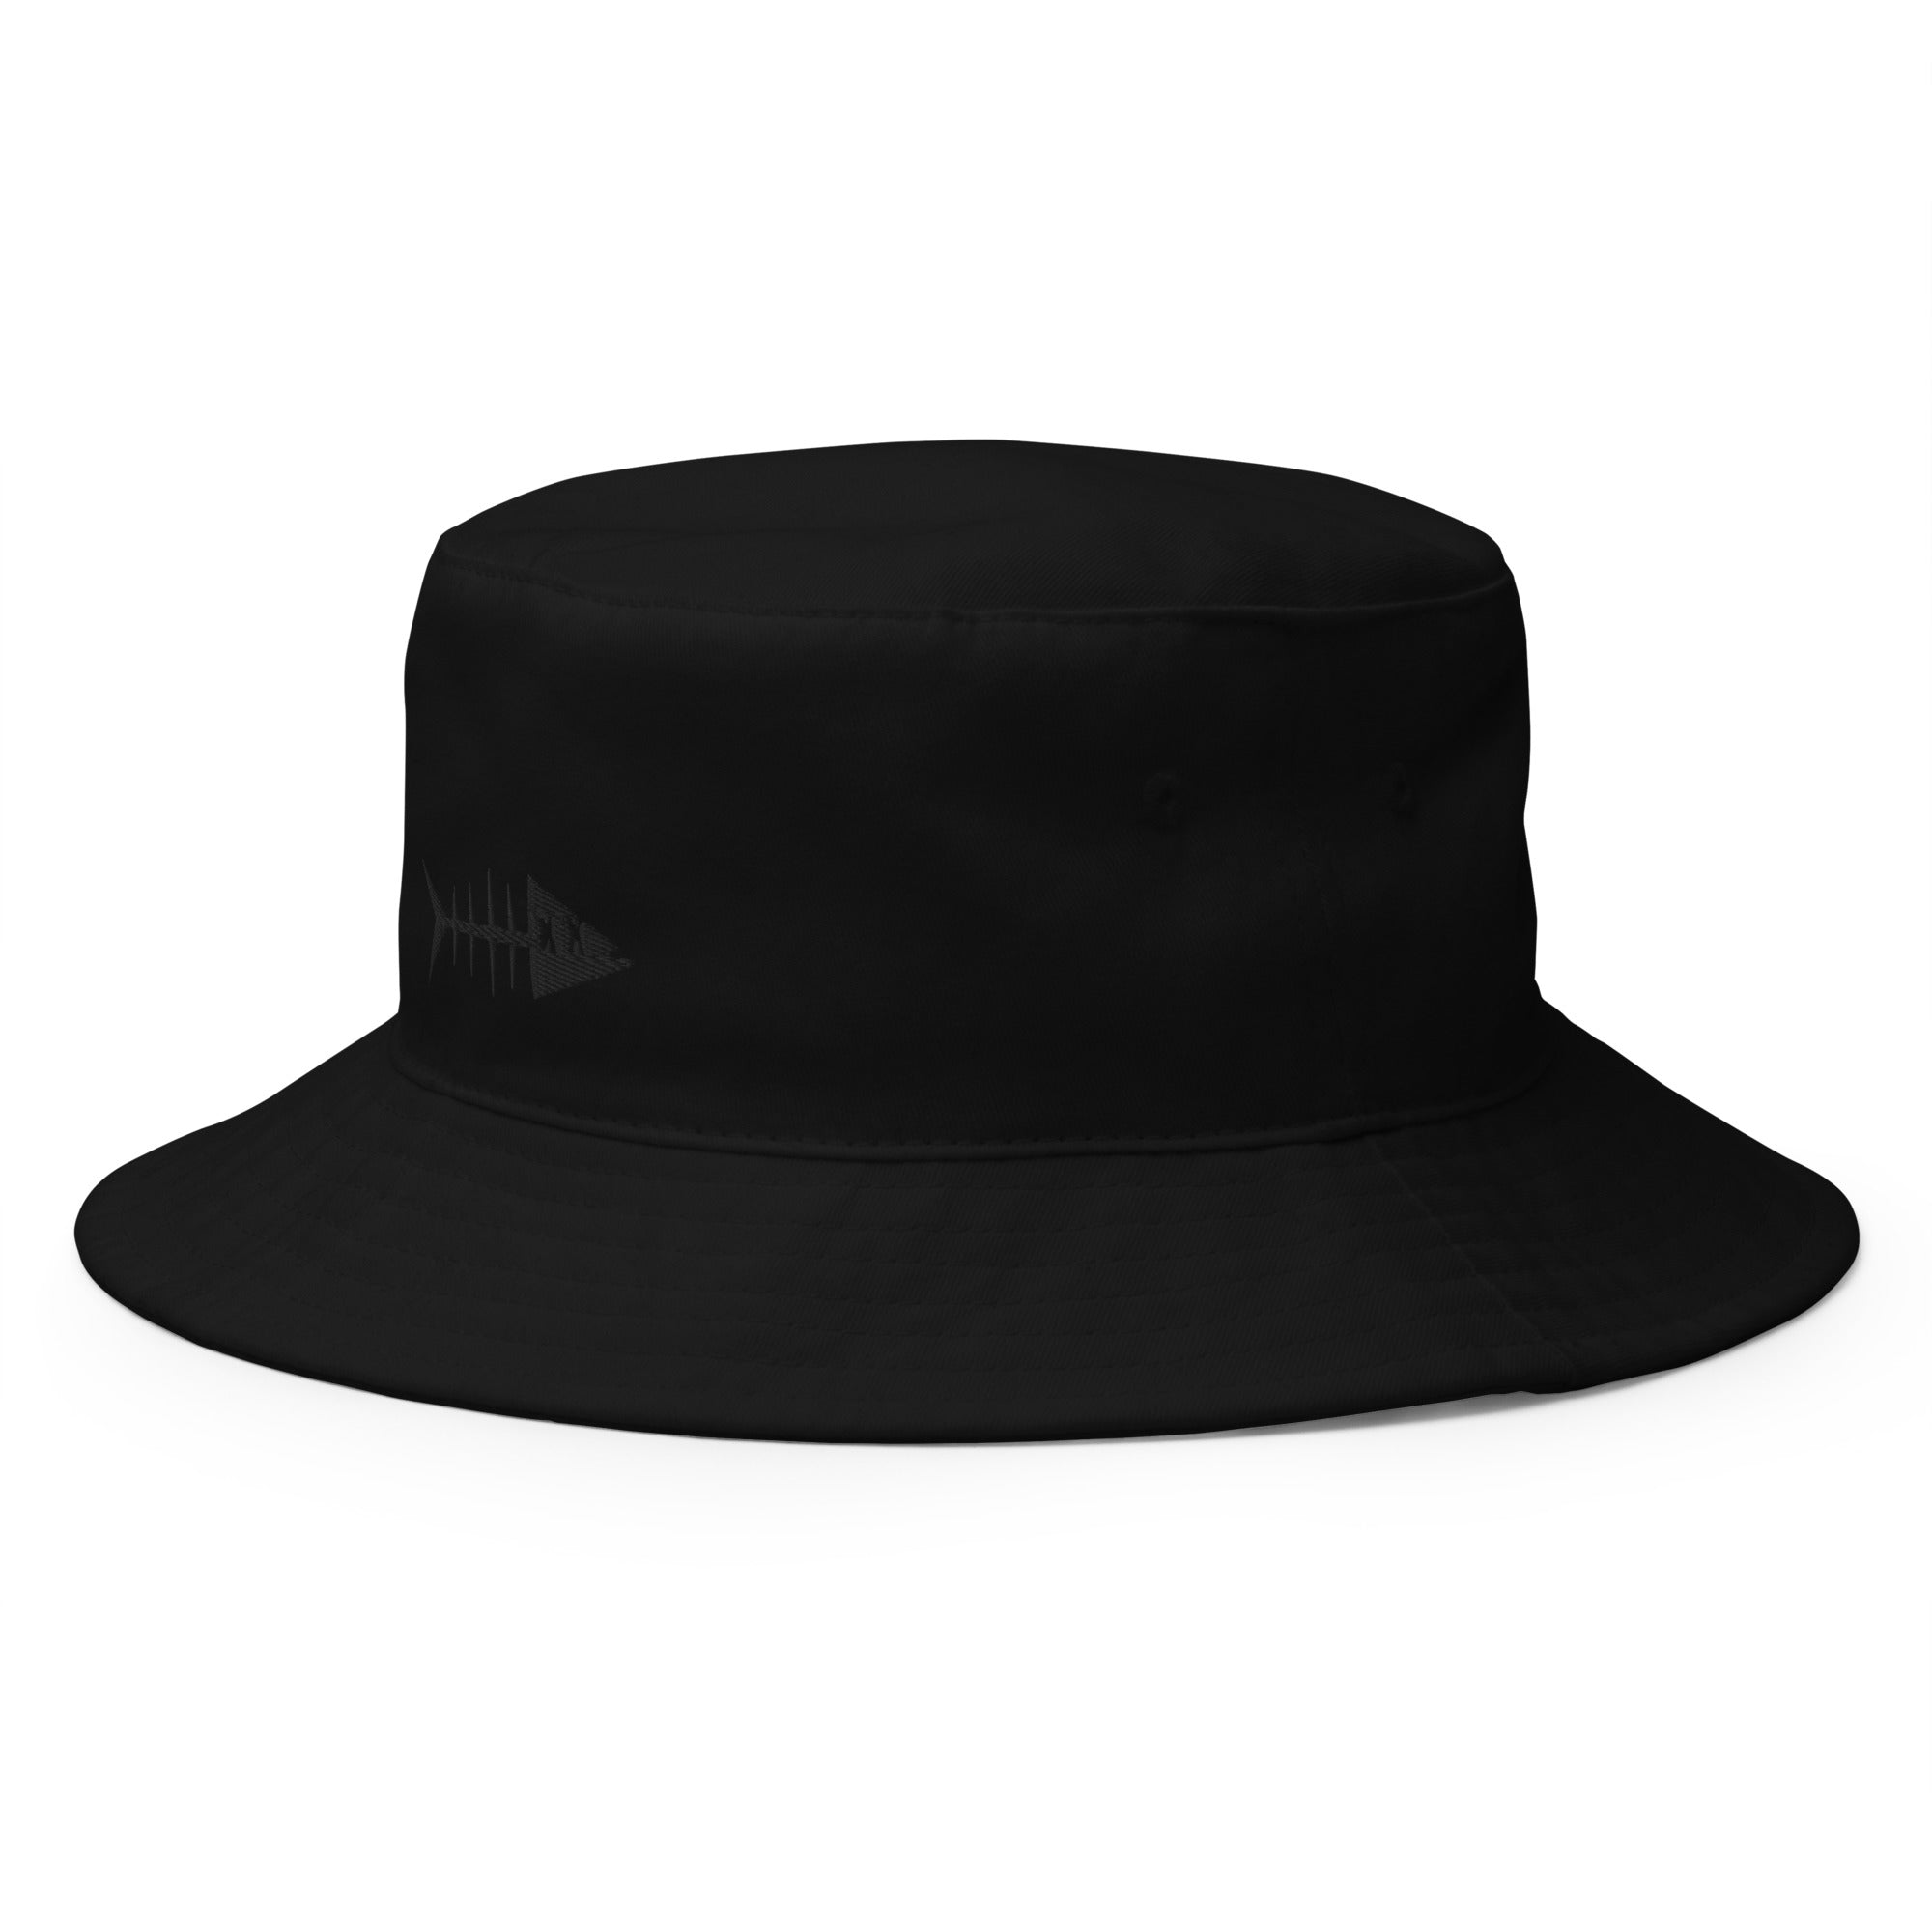 Clishirt© Embroidered Black Fish Bucket Hat